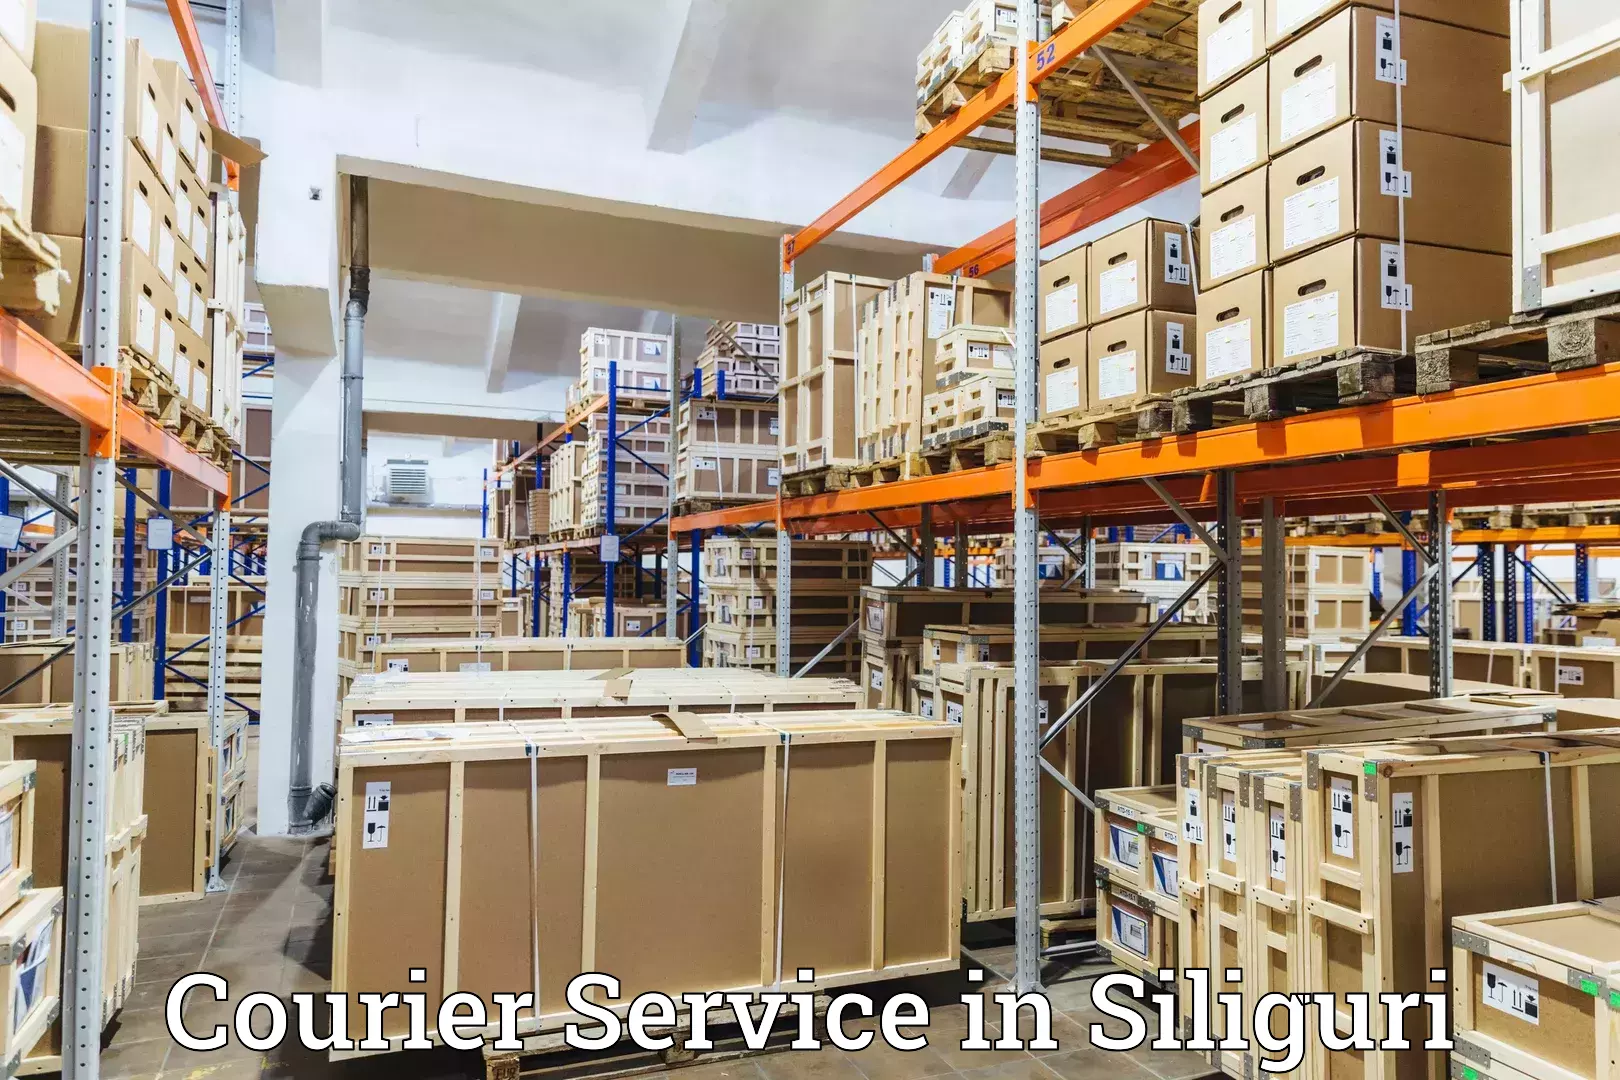 Customer-focused courier in Siliguri